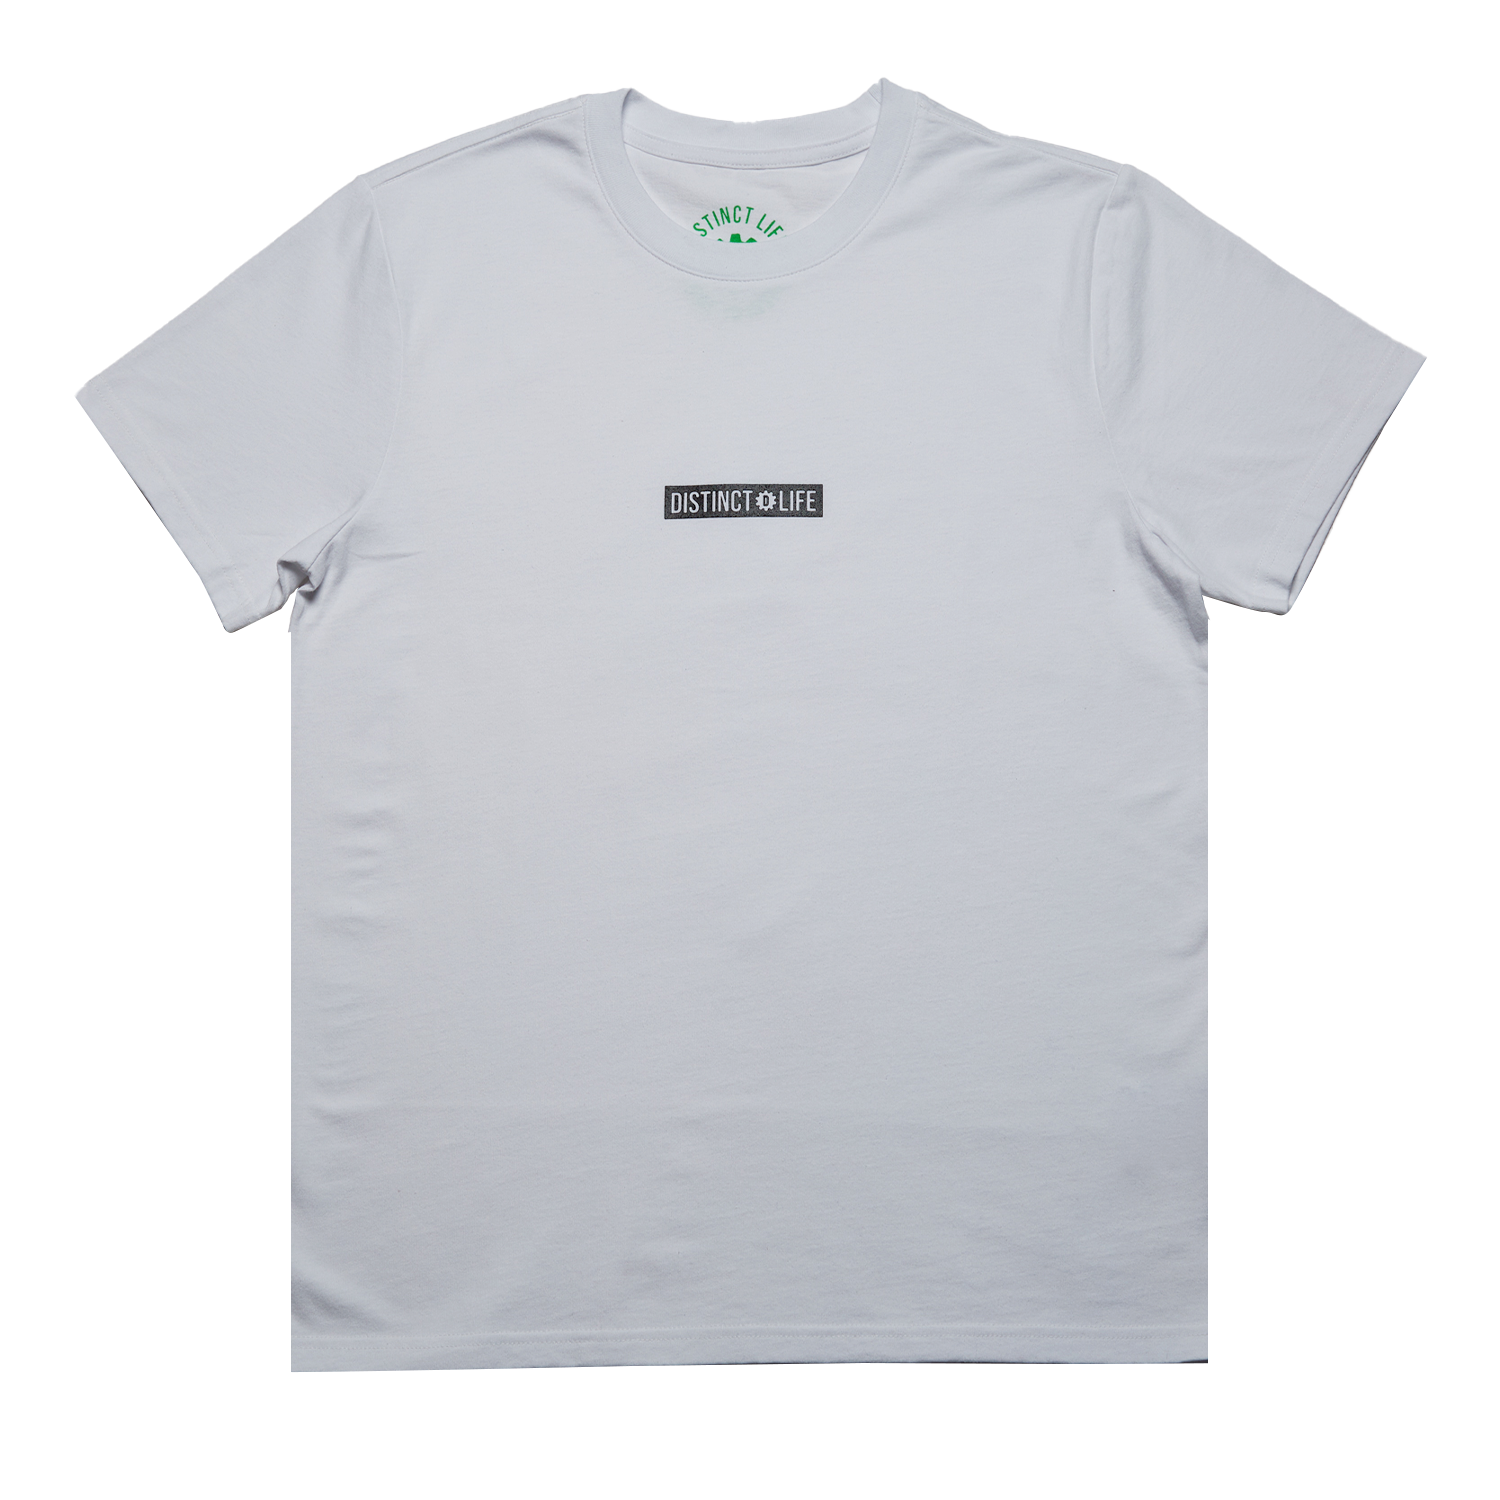 Hollister Men's Long Sleeve Graphic T-Shirt Palestine